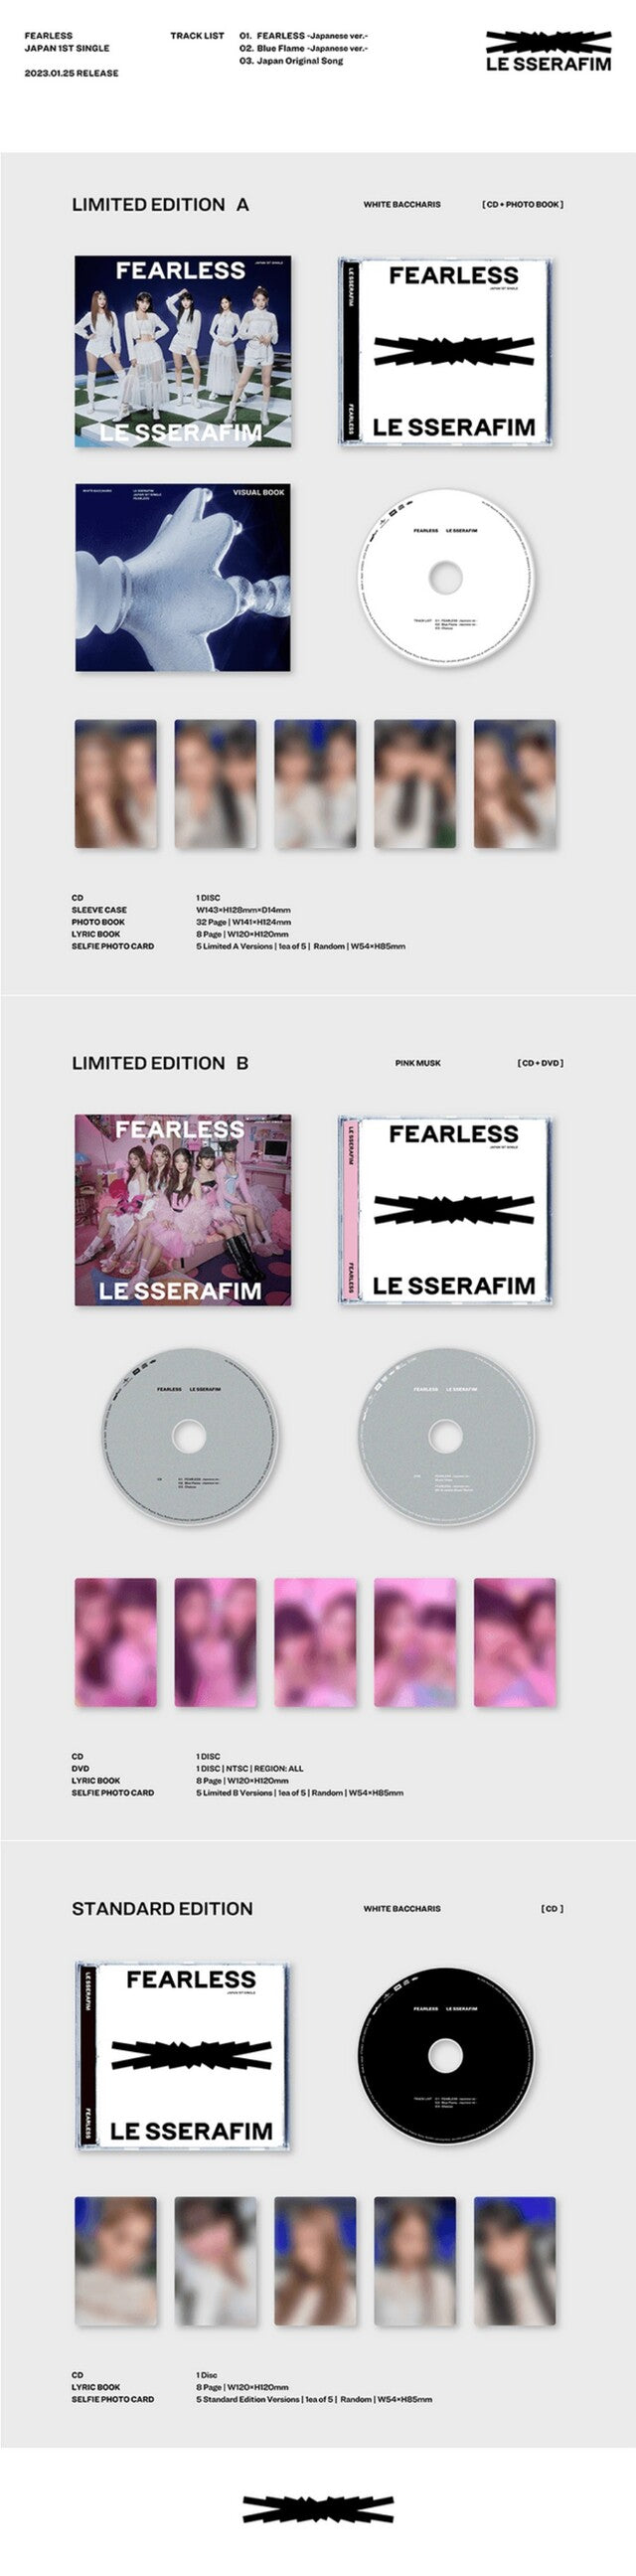 [PREORDER] LESSERAFIM -JAPAN 1ST SINGLE FEARLESS 3 SET